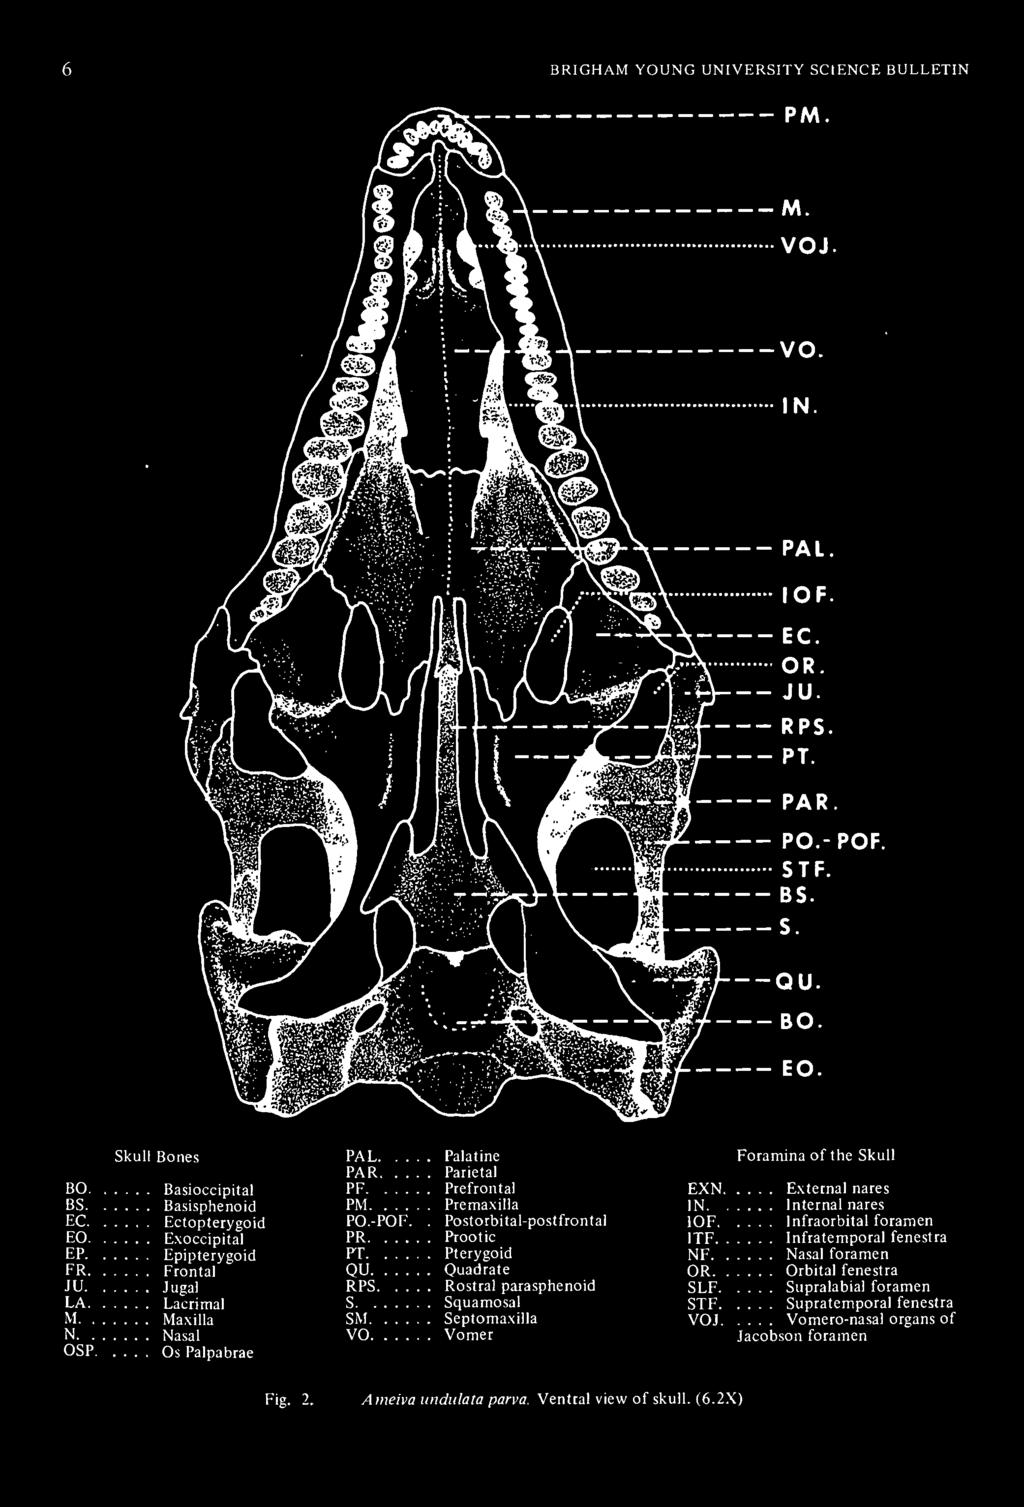 nares Internal nares Infraorbital foramen Infratemporal fenestra Nasal foramen Orbital fenestra Supralabial foramen